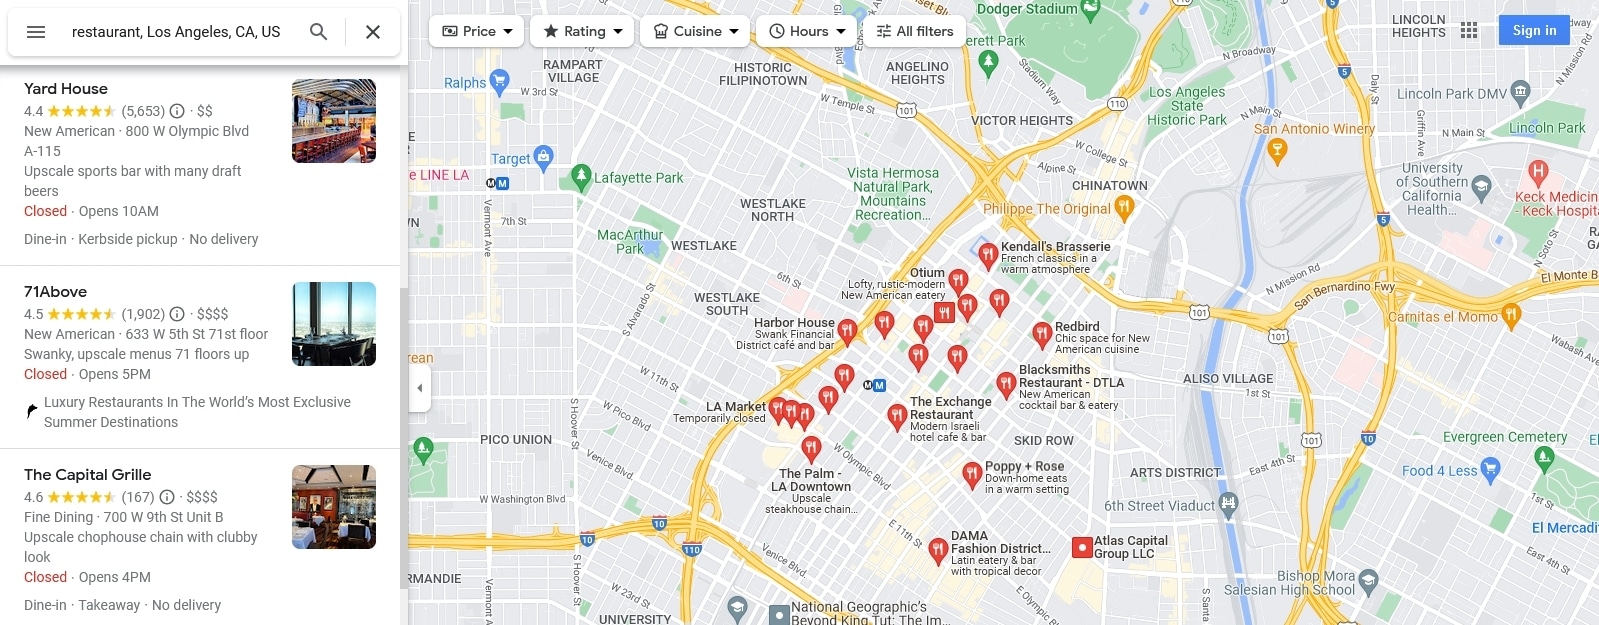 Google Maps - Los Angeles Restaurants